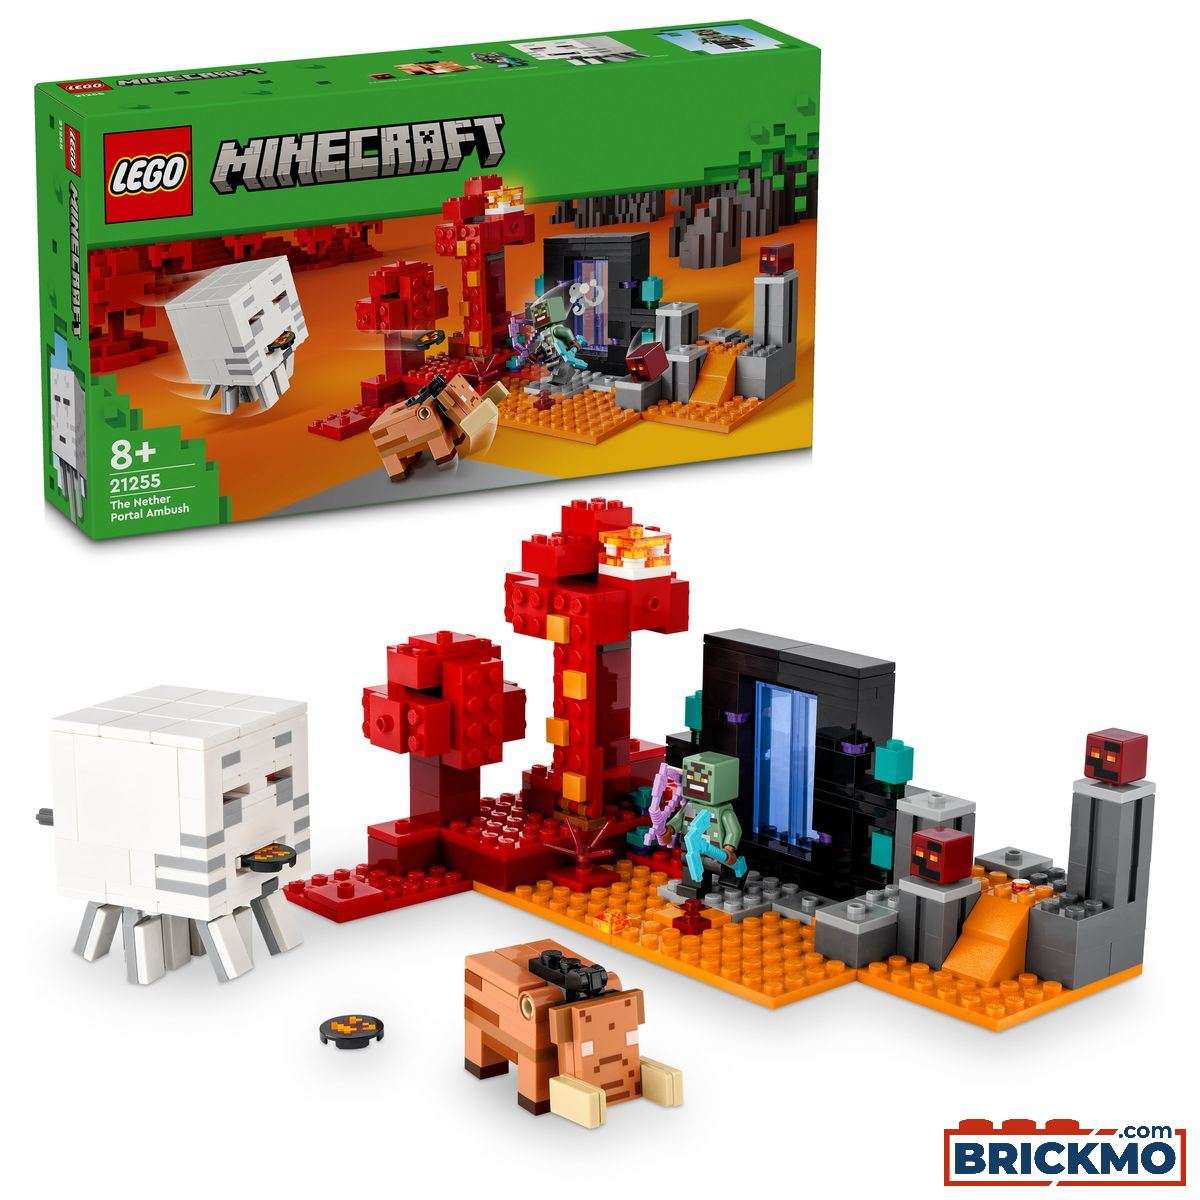 LEGO Minecraft 21255 The Nether Portal Ambush 21255